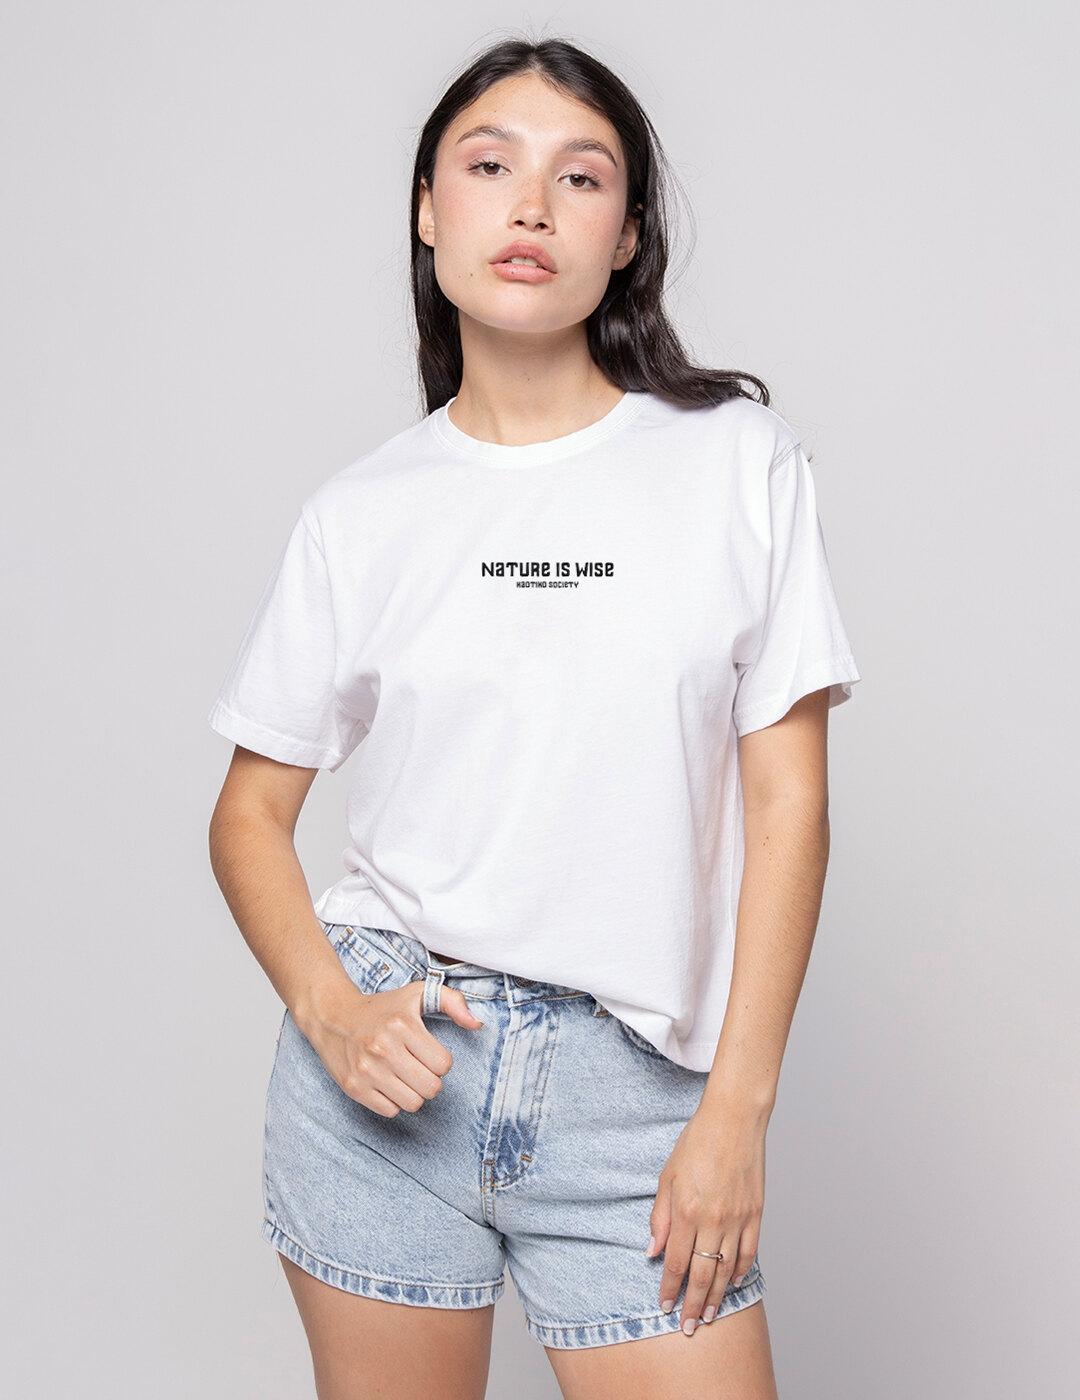 Camiseta KAOTIKO WASHED NATURE IS WISE - White